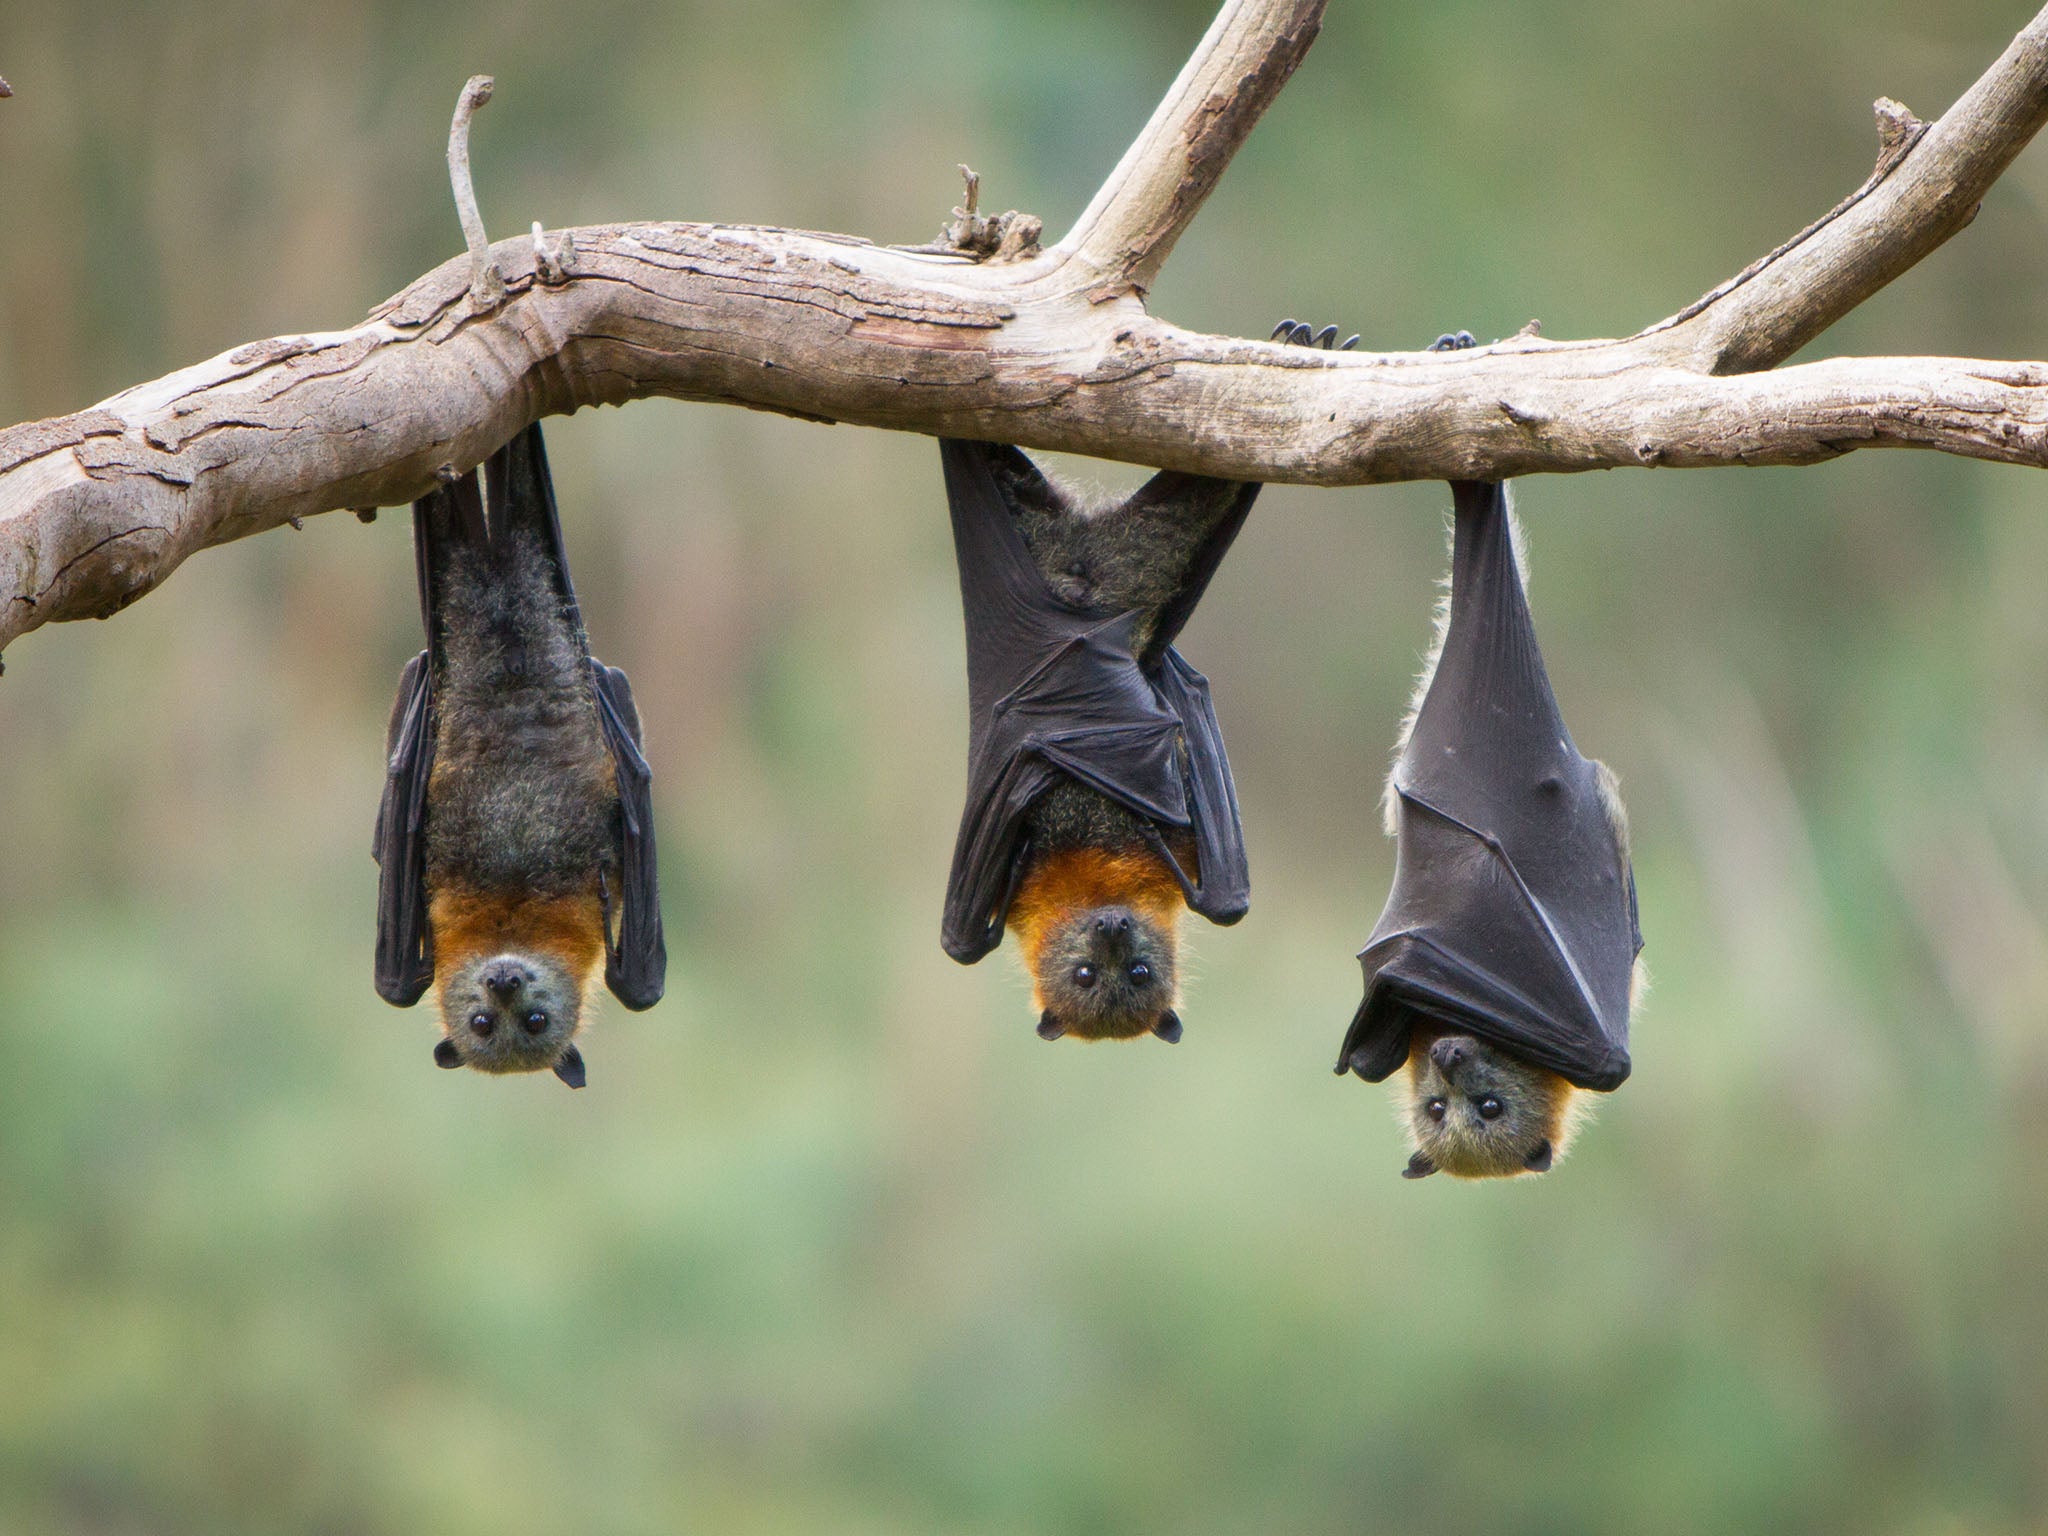 Bats make up 20 per cent of all known mammals